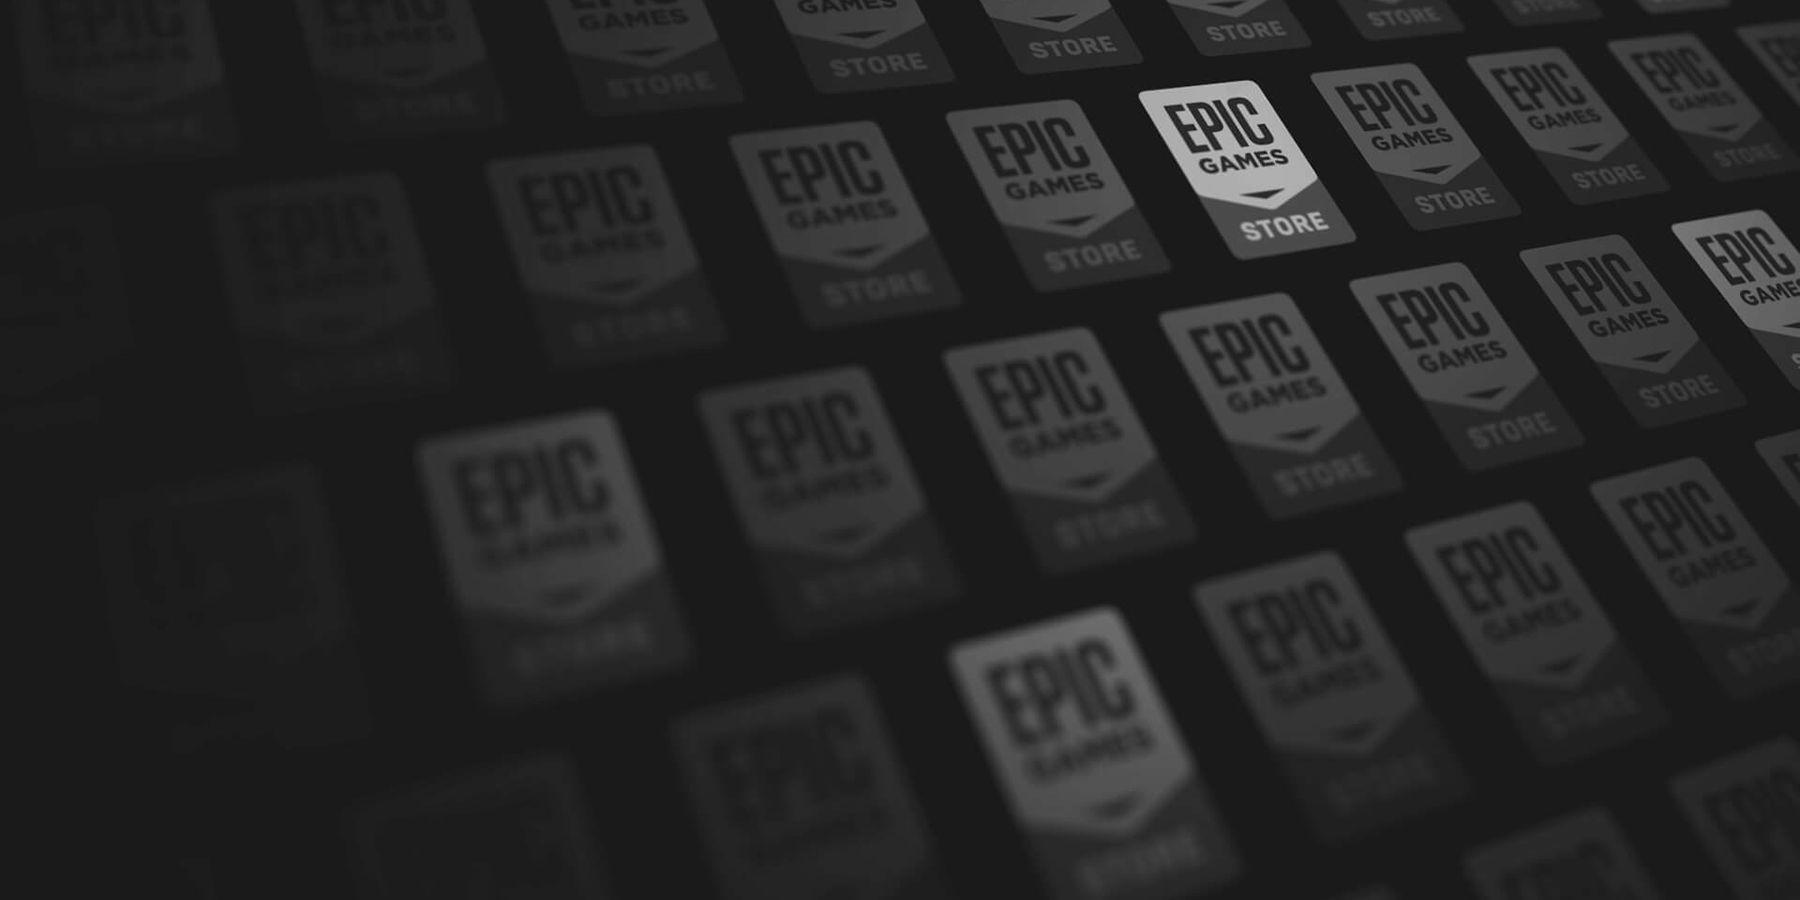 Epic Games Store Game Free Game para el 8 de septiembre revelado